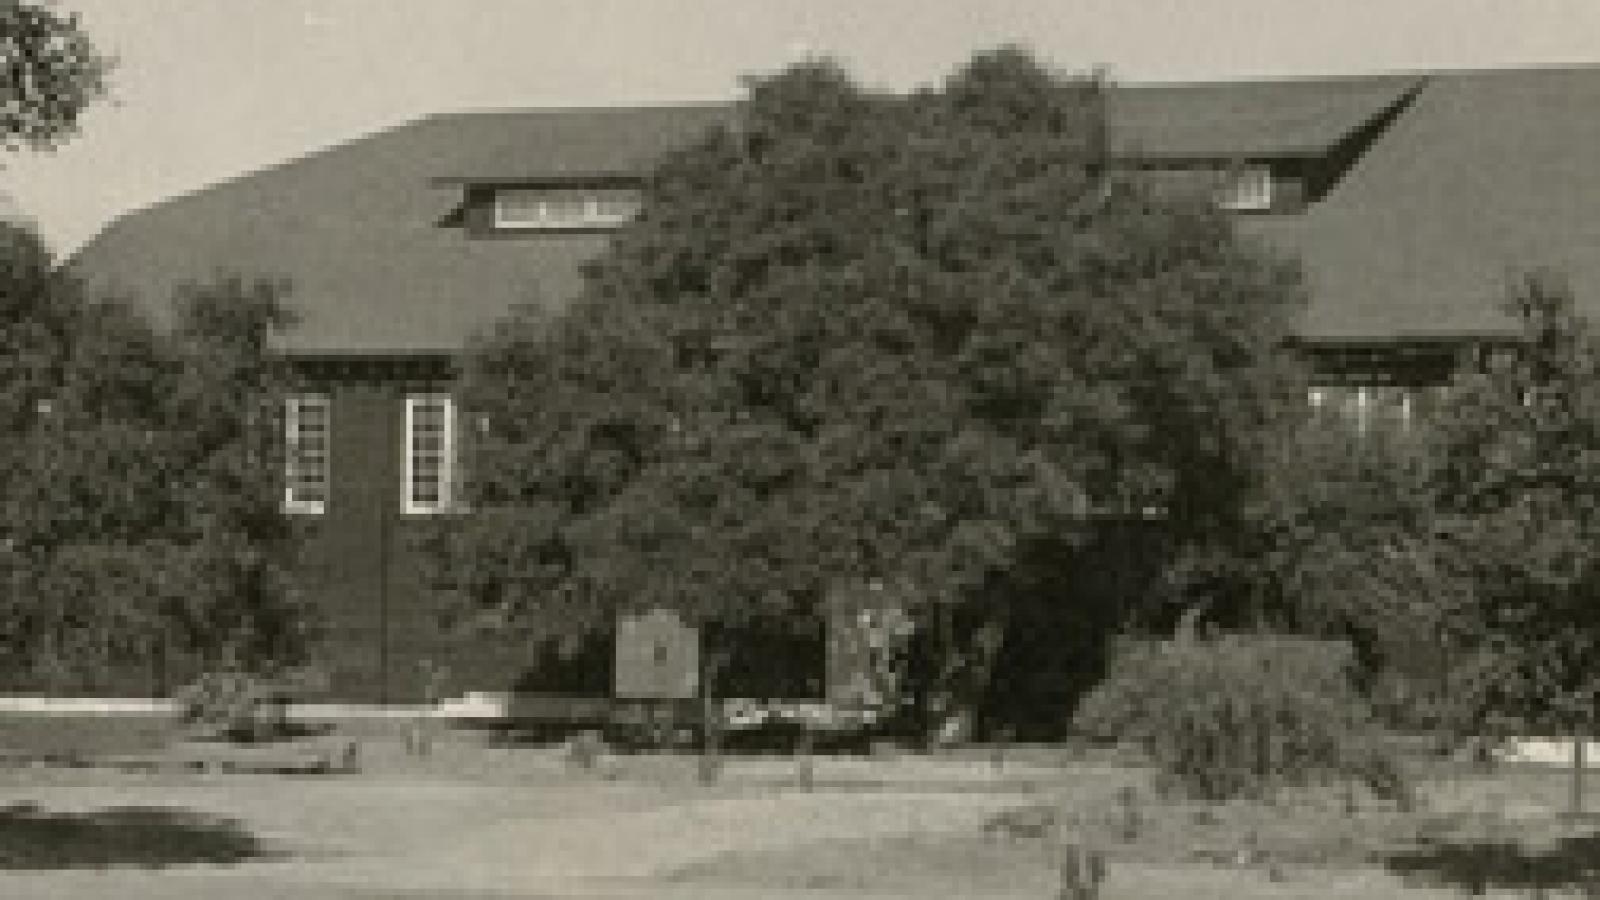 Renwick Gymnasium